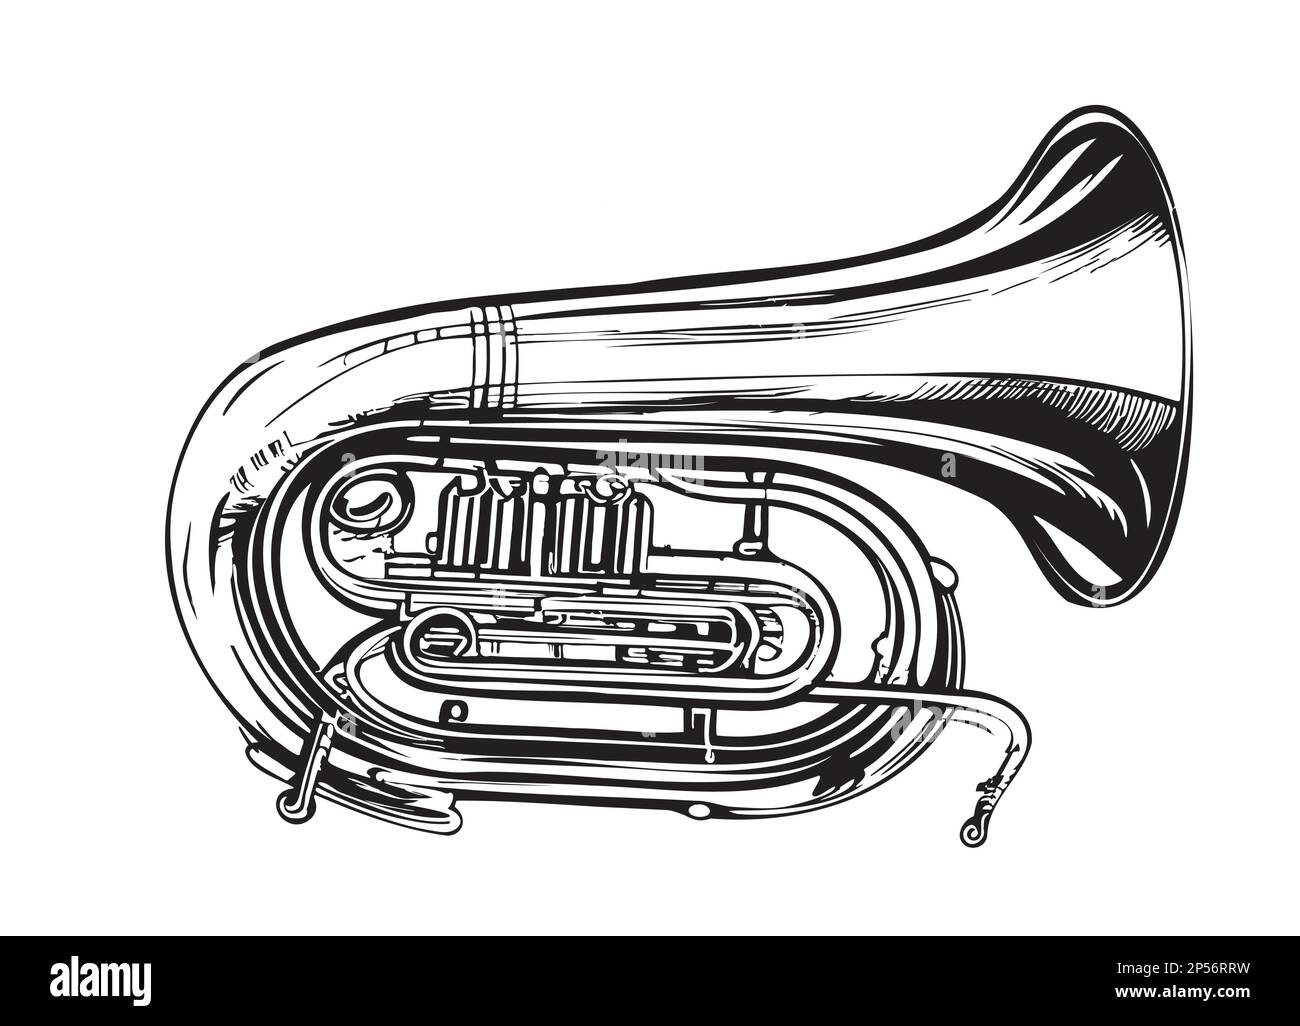 Tuba-Musikinstrument Retro-Skizze handgezeichnete Illustration  Stock-Vektorgrafik - Alamy